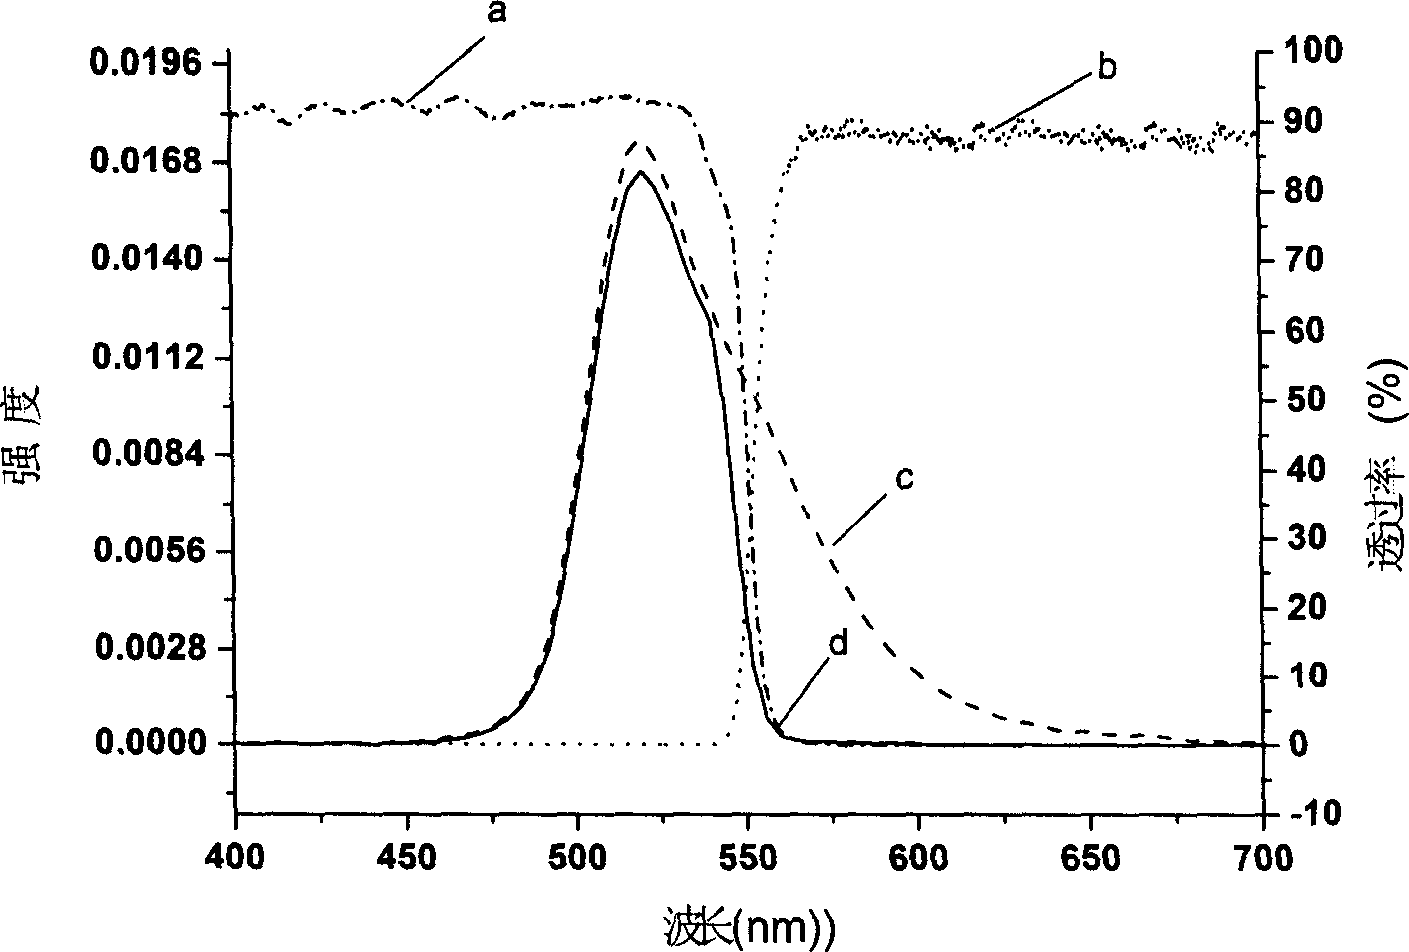 Multi-channel column imaging fluorescent detector